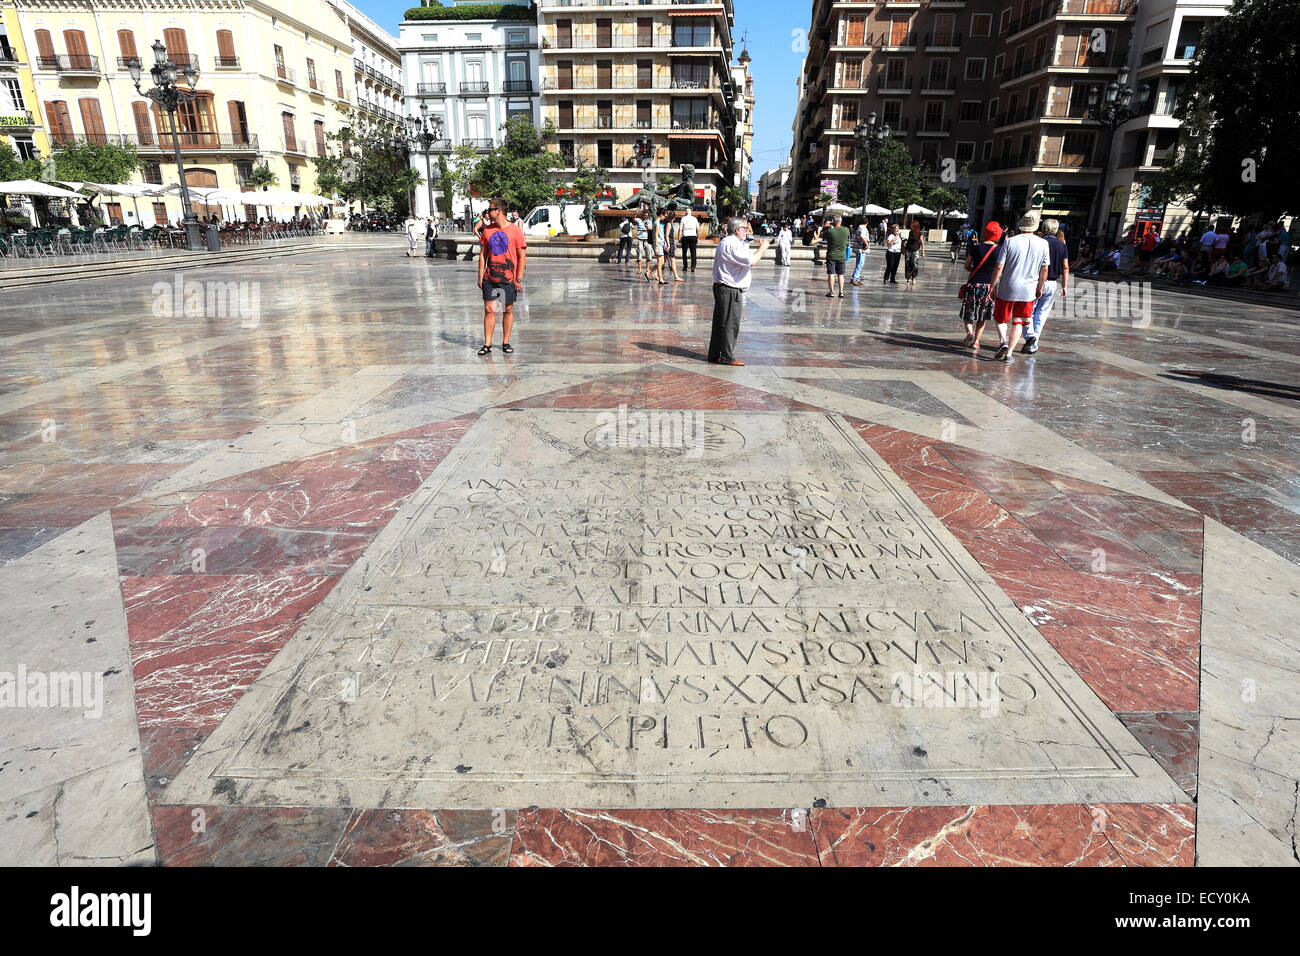 Ornate marbled paving, Plaza de la Virgin, Valencia City, Spain, Europe  Stock Photo - Alamy